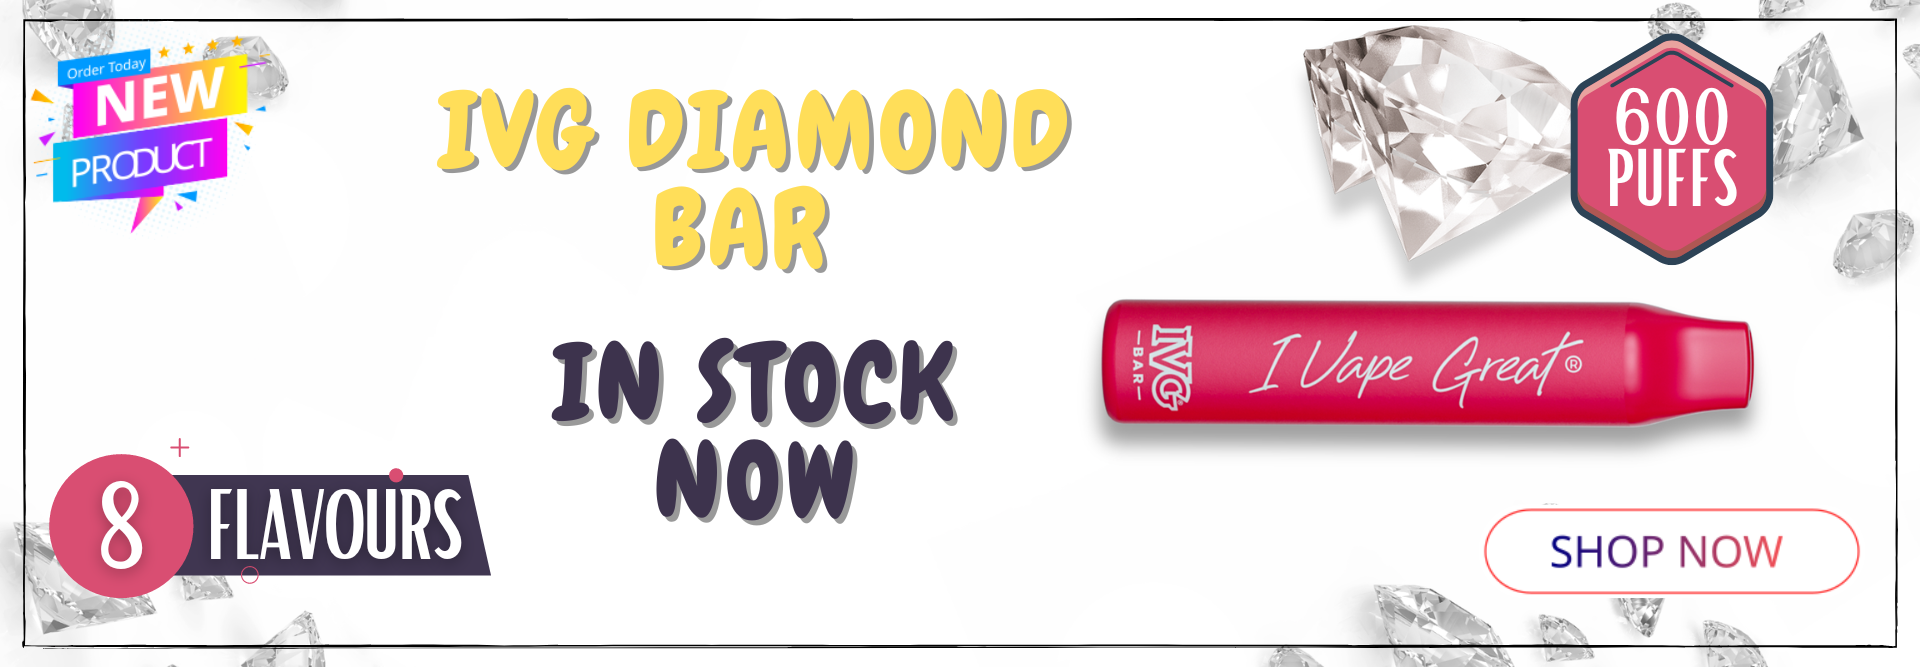 Ivg Dimond Bar Disposable